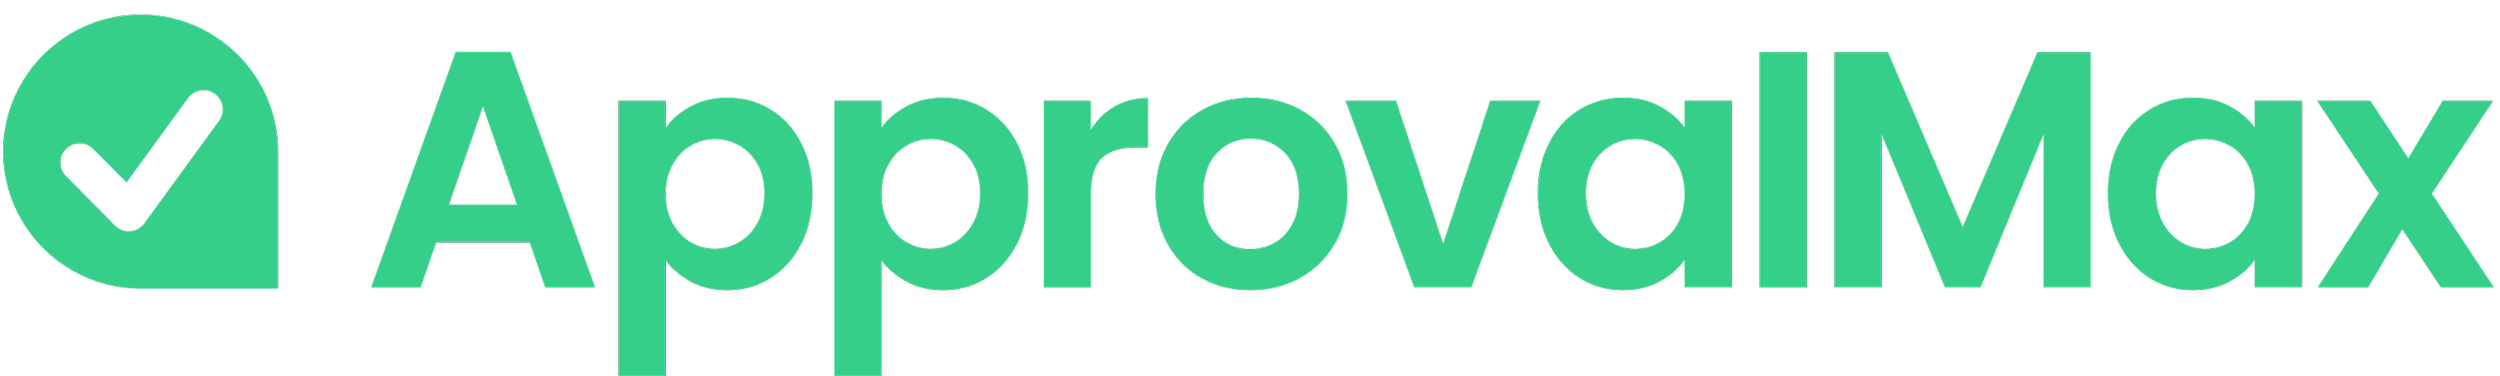 ApprovalMax-logo-rgb-green.png